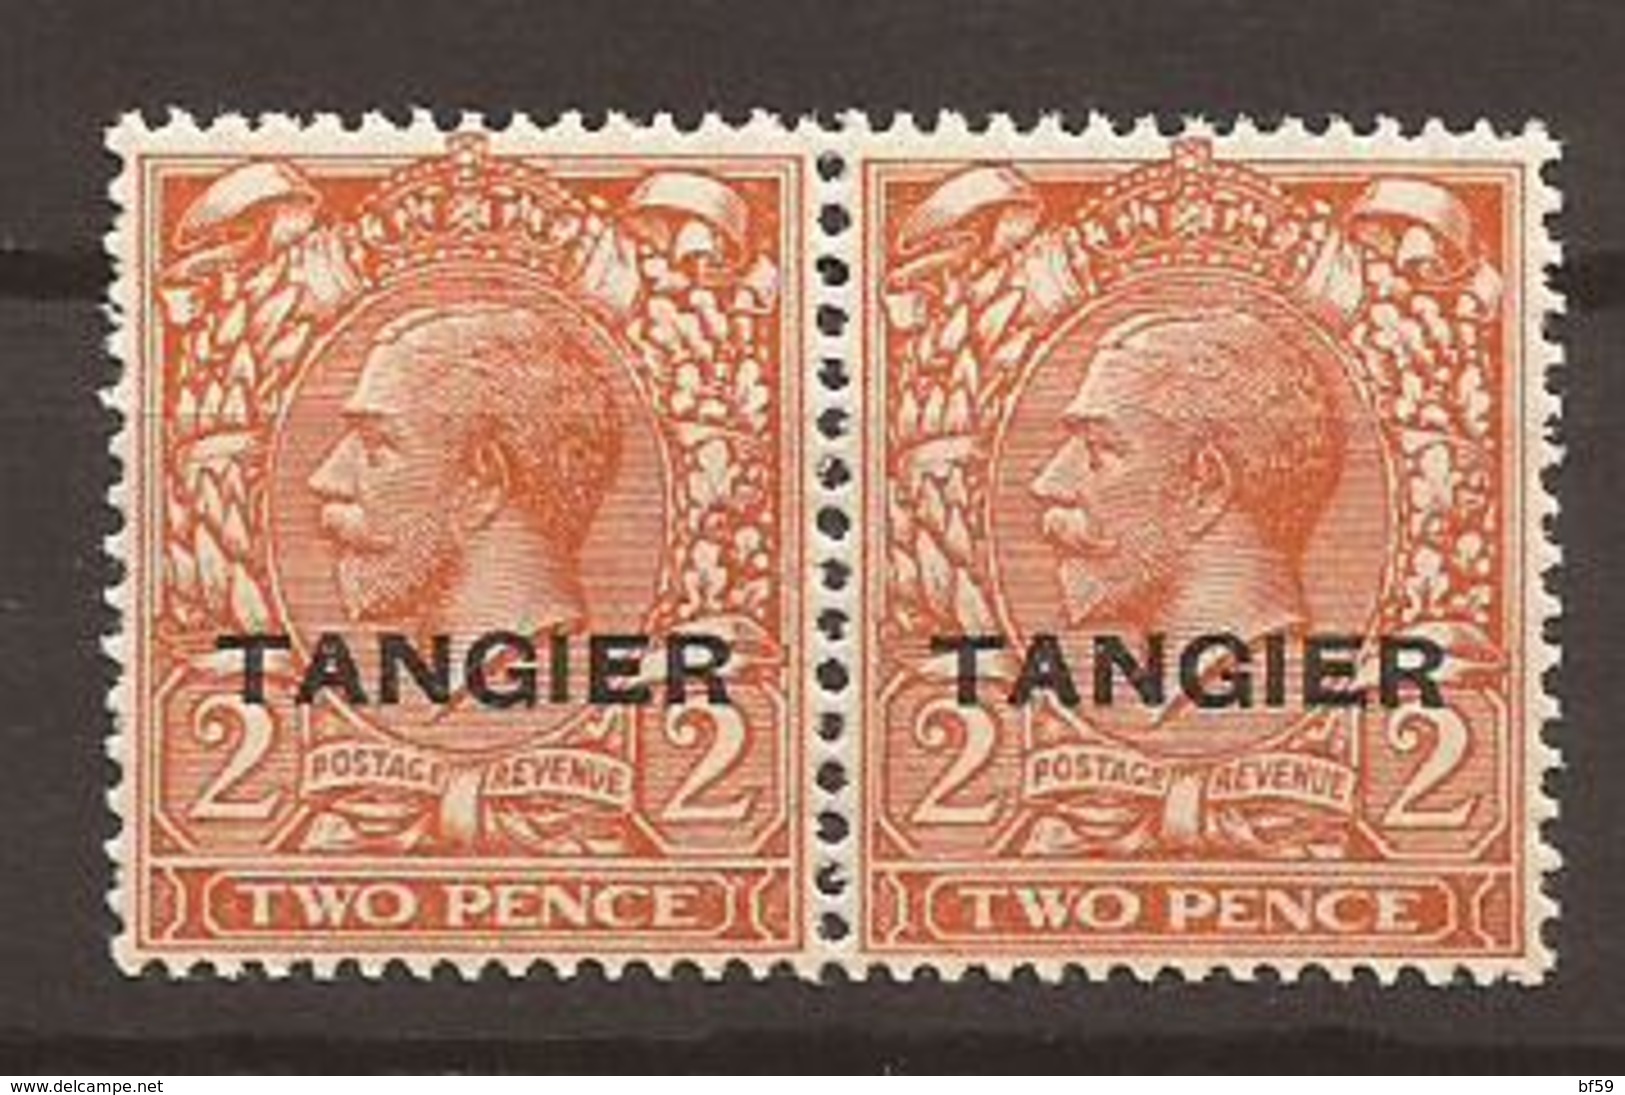 MAROC - Bureau Anglais 1927 - N° 71 Paire NEUF XX MNH - Morocco Agencies / Tangier (...-1958)